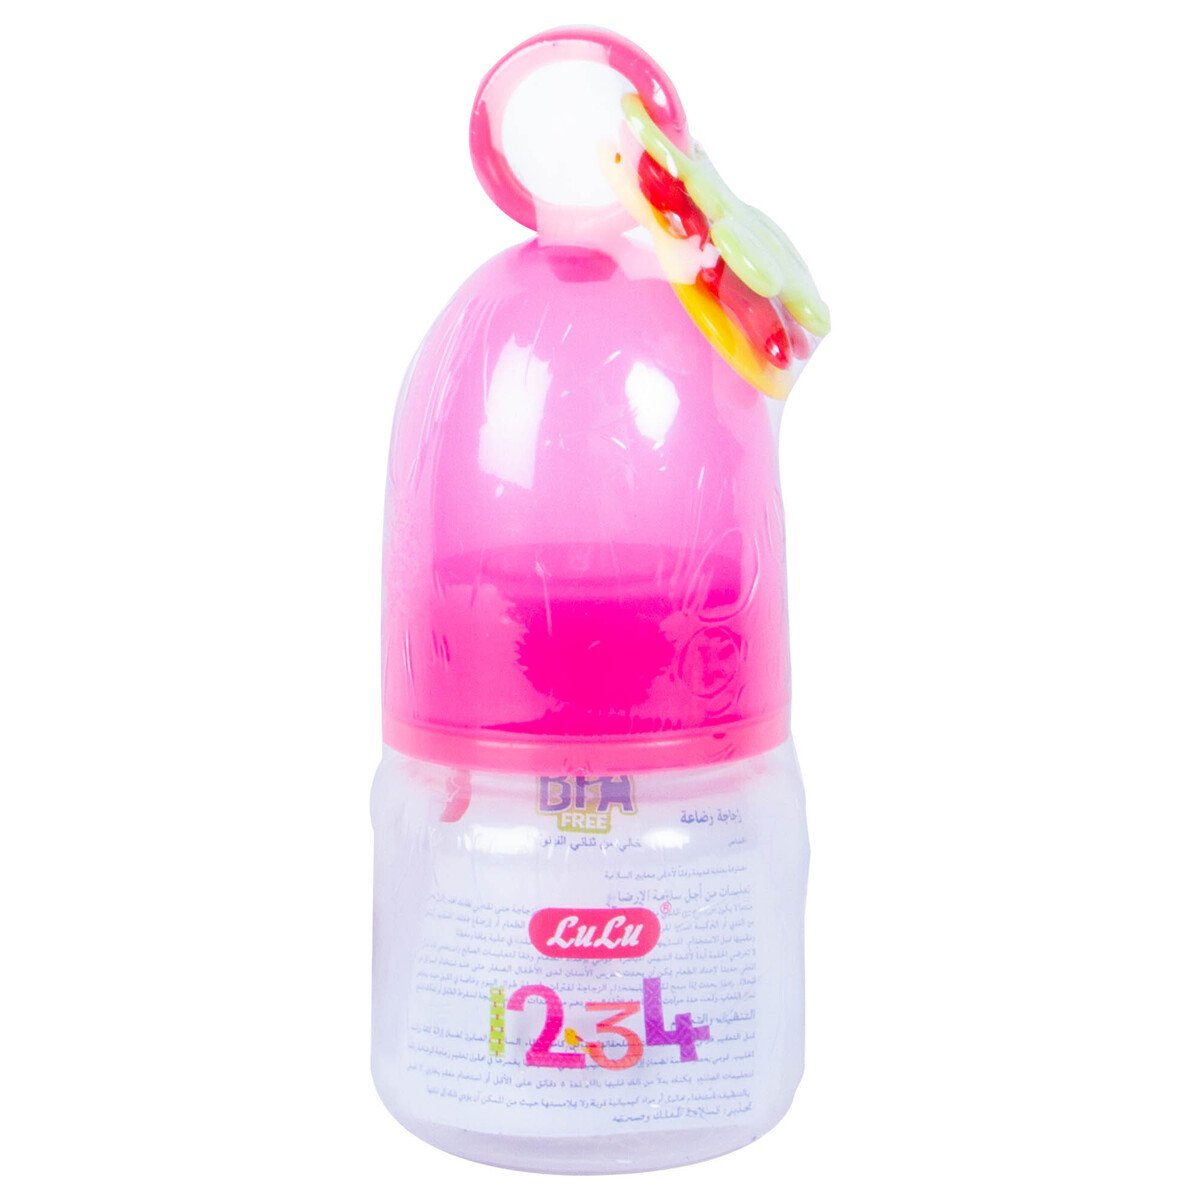 LuLu Baby Feeding Bottle Assorted Color 1pc